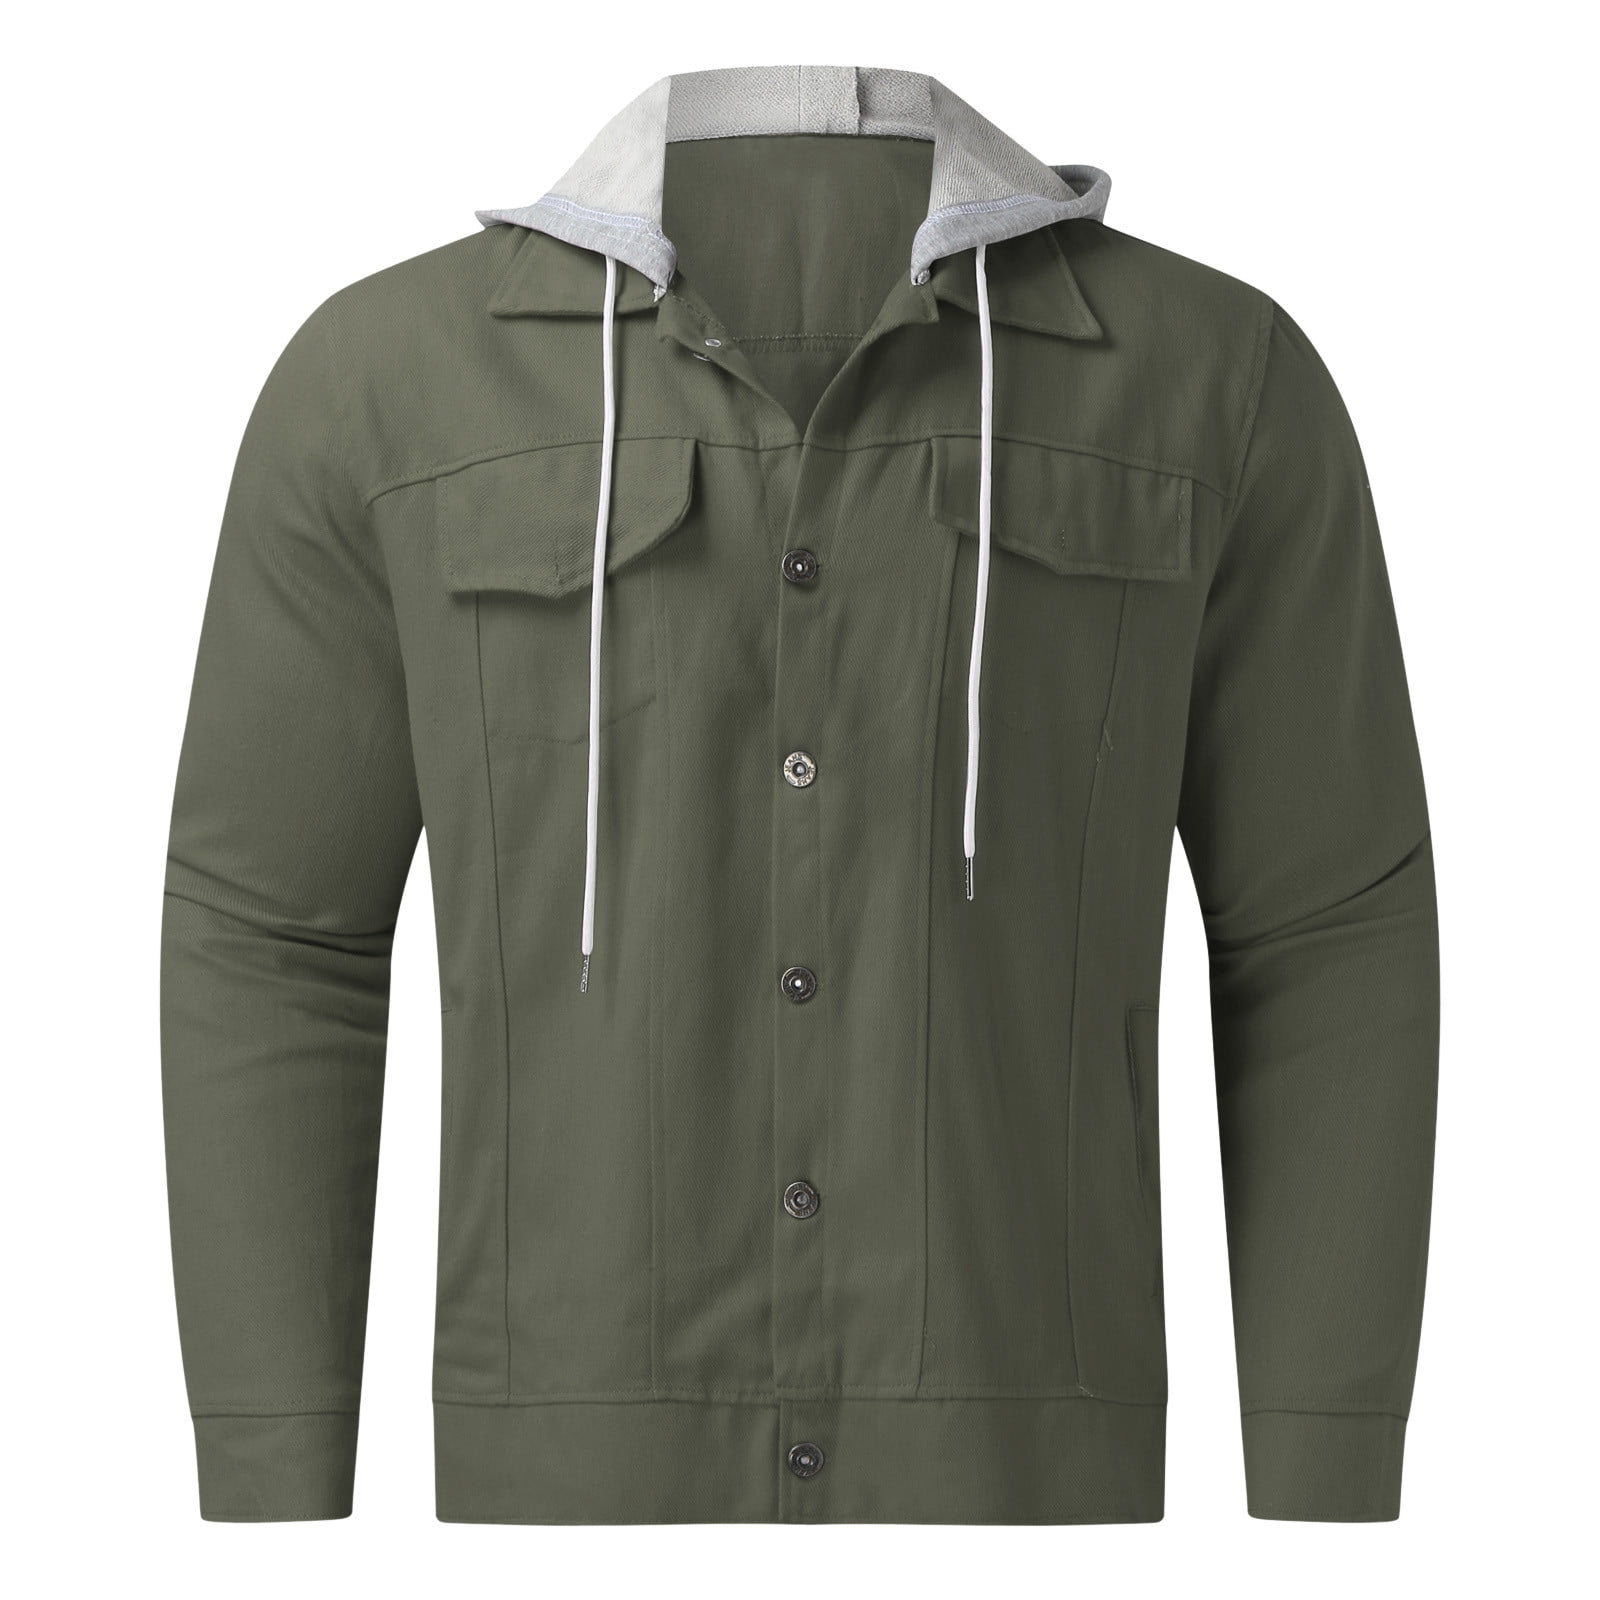 Green Contrast Stitch Denim Jacket - New Arrivals - New In - TOPMAN USA |  Topman jackets, Topman, Denim jacket